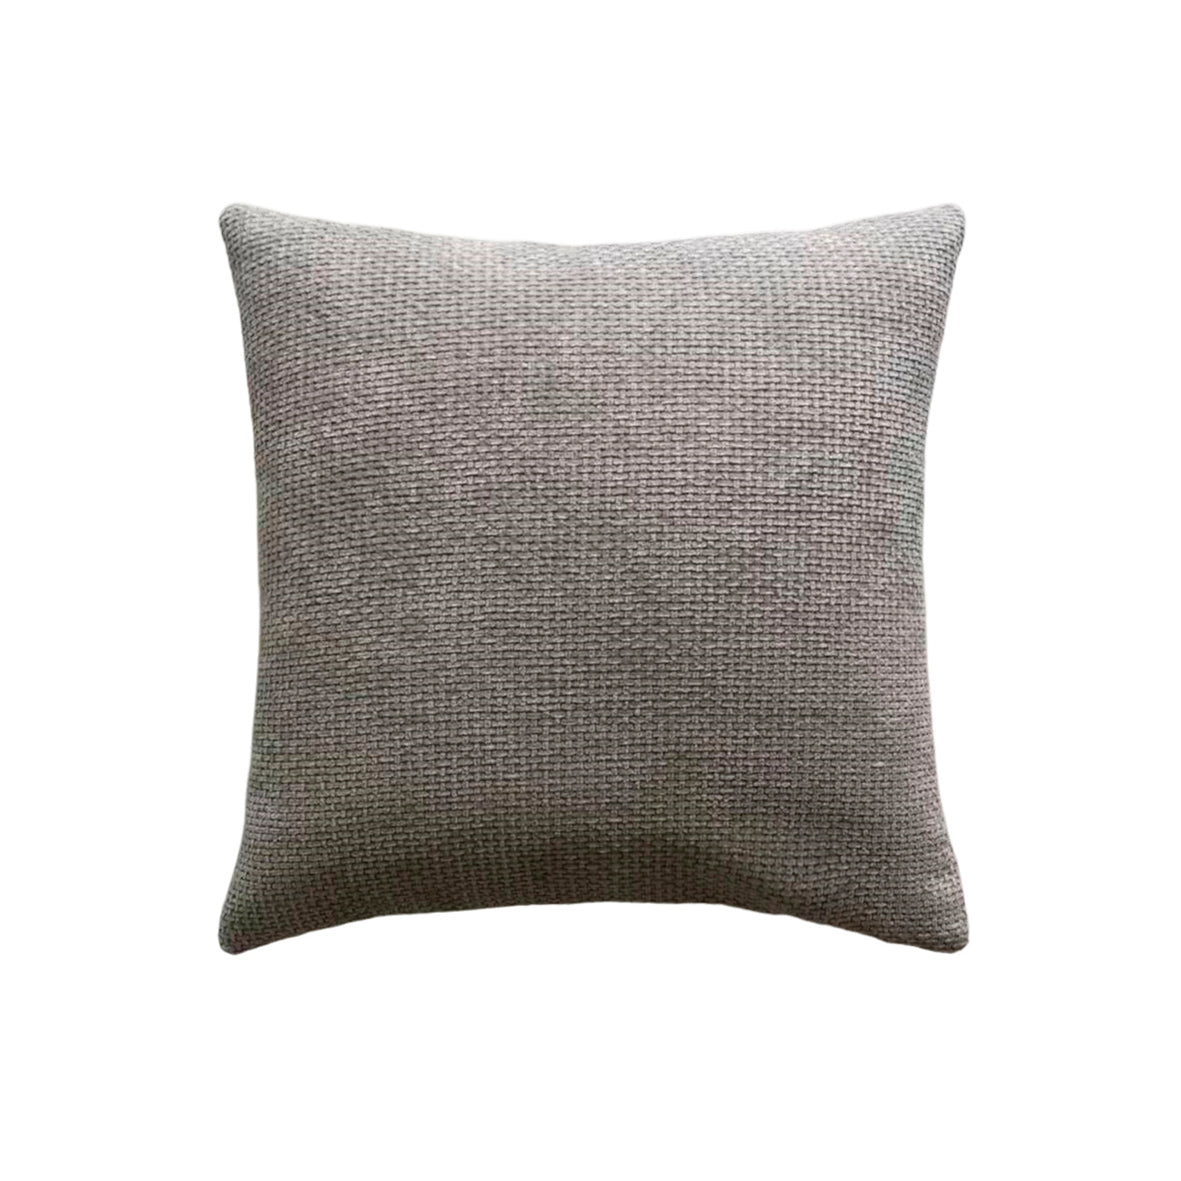 Cushion cover Alenia Light grey - 45 x 45 cm